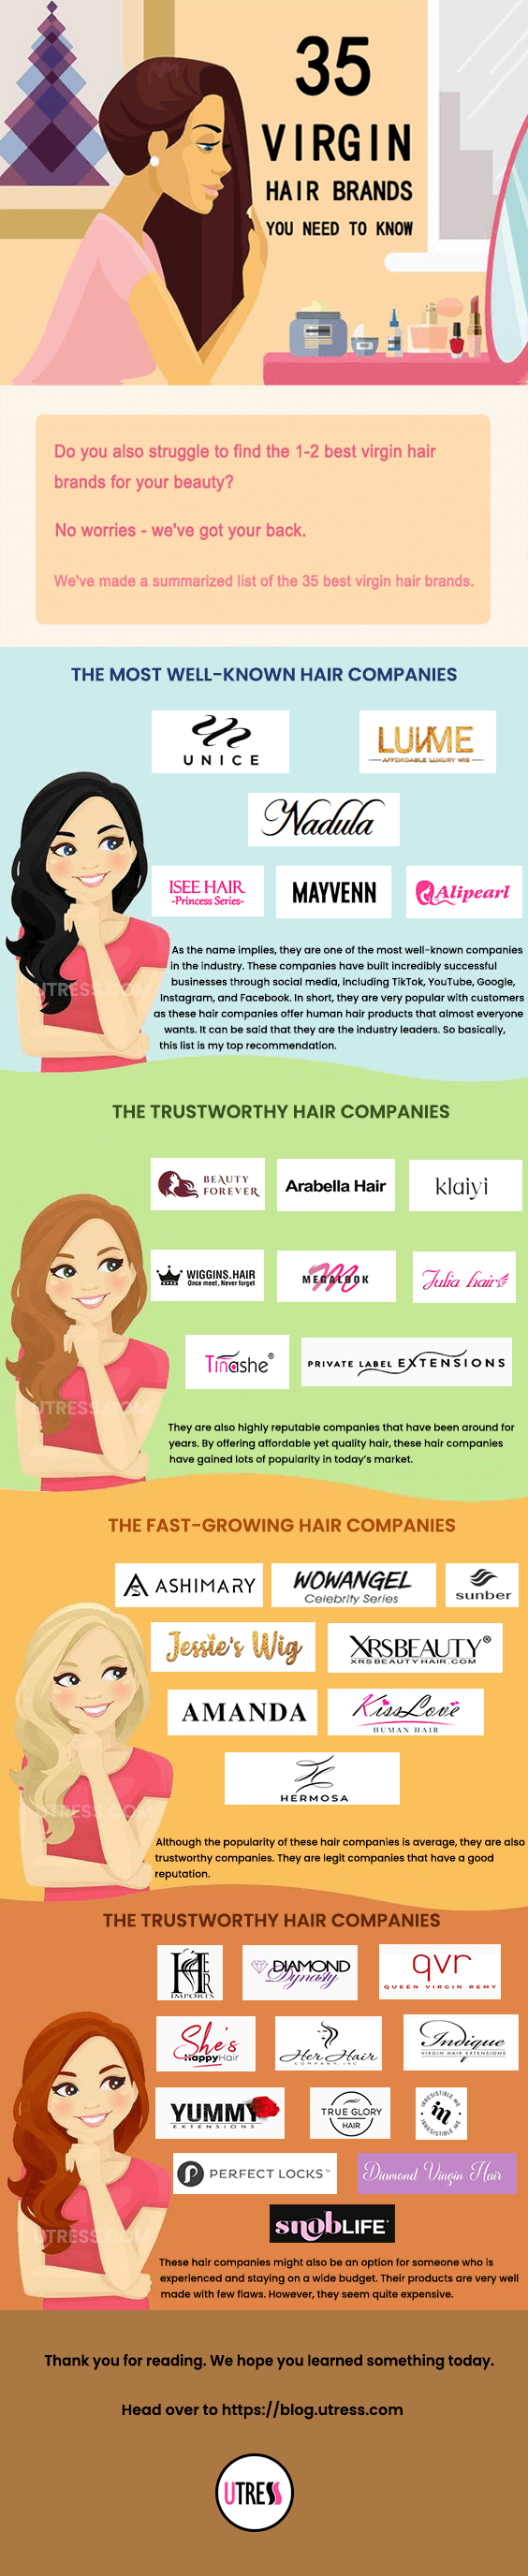 infographic: best 35 virgin hair brands